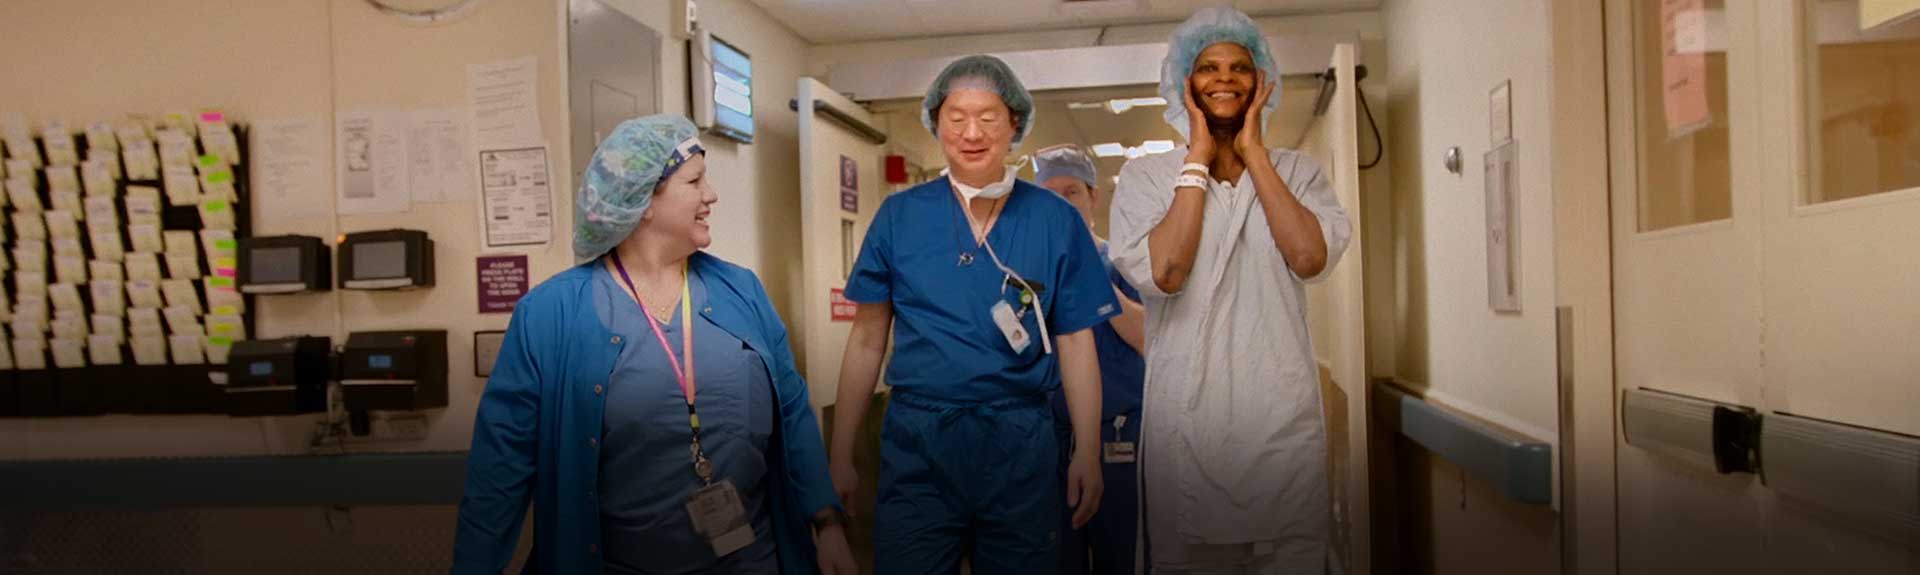 Image of nurses walking down the hall